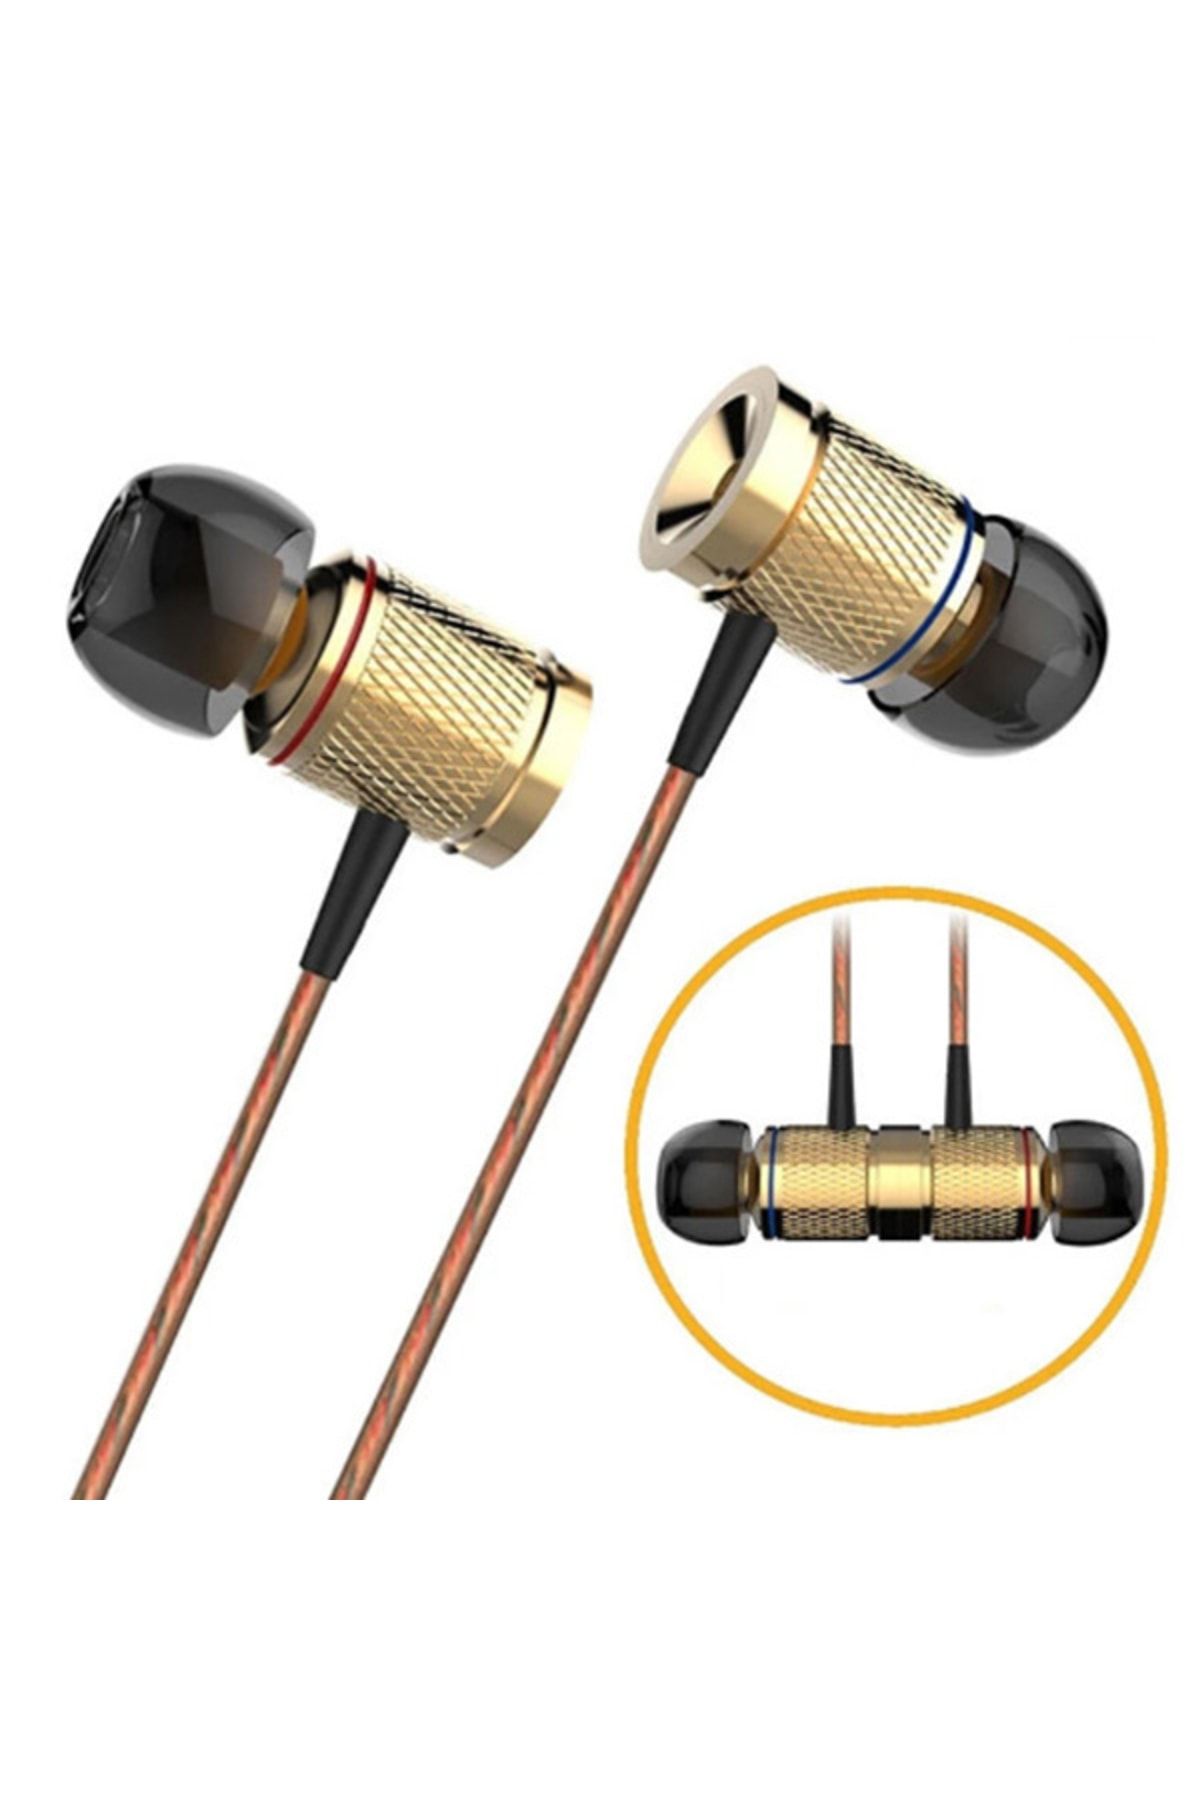 Vendas Kulakiçi Plextone Dx2 3.5mm Metal Kablolu Stereo Kulak Içi Oyuncu Kulaklık